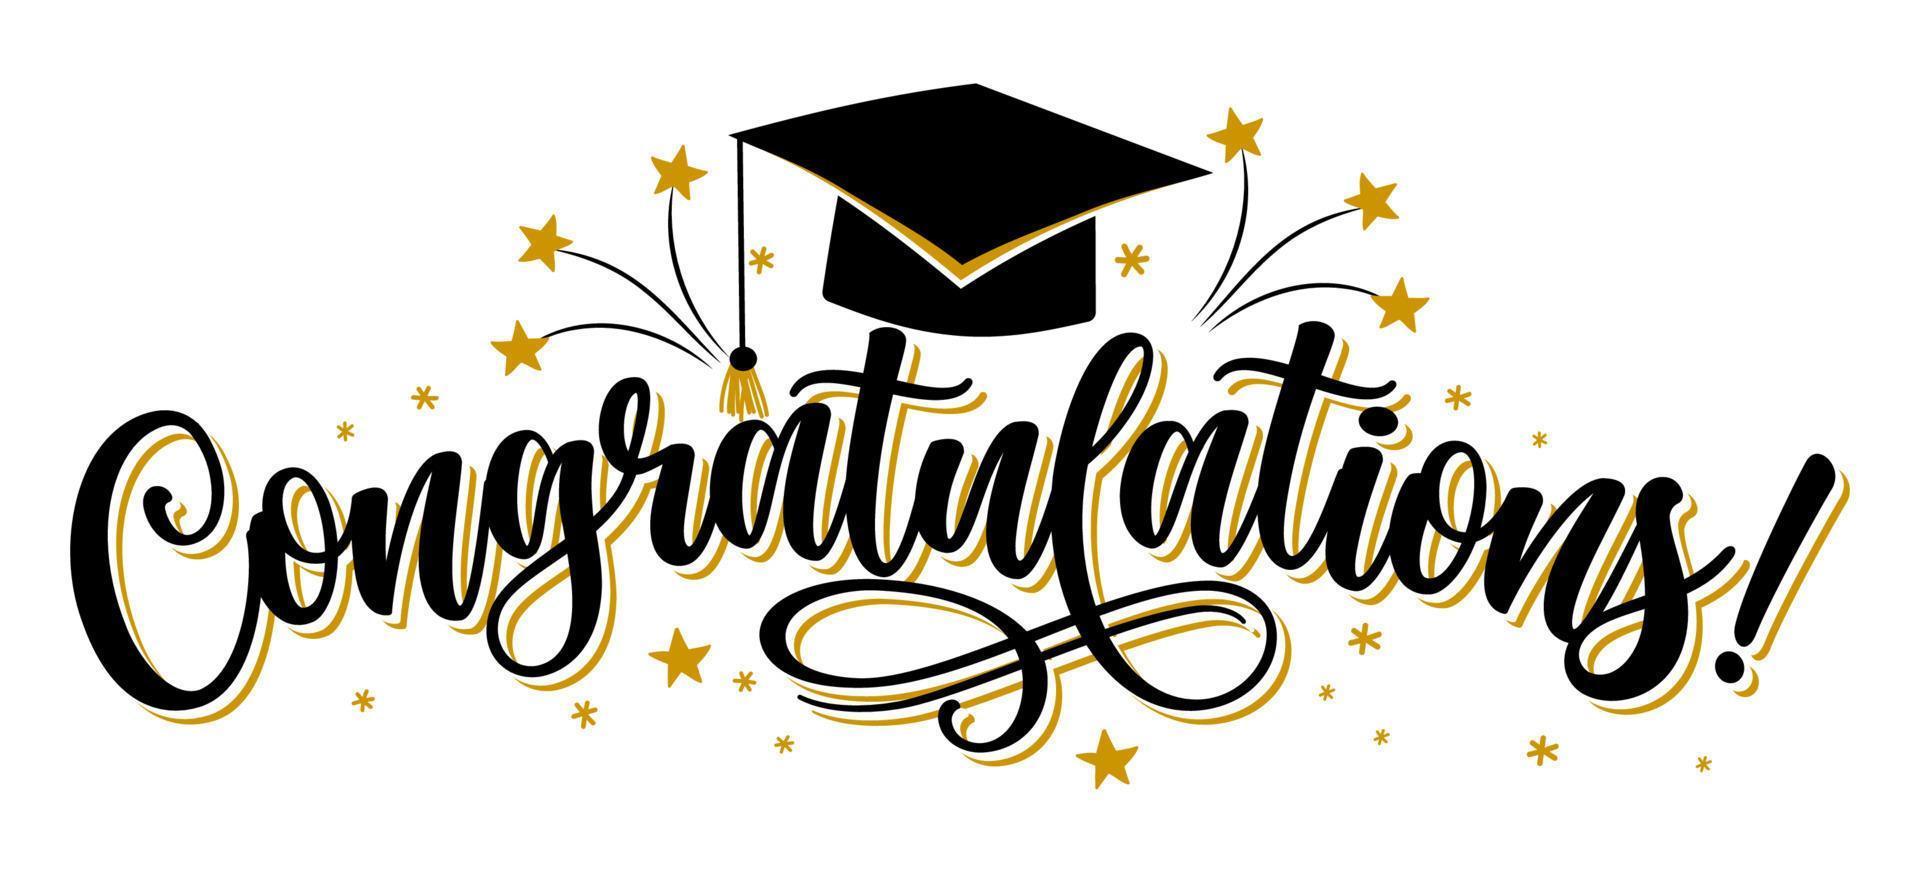 Congratulations Graduates Class Of 2022 Typography Black Text